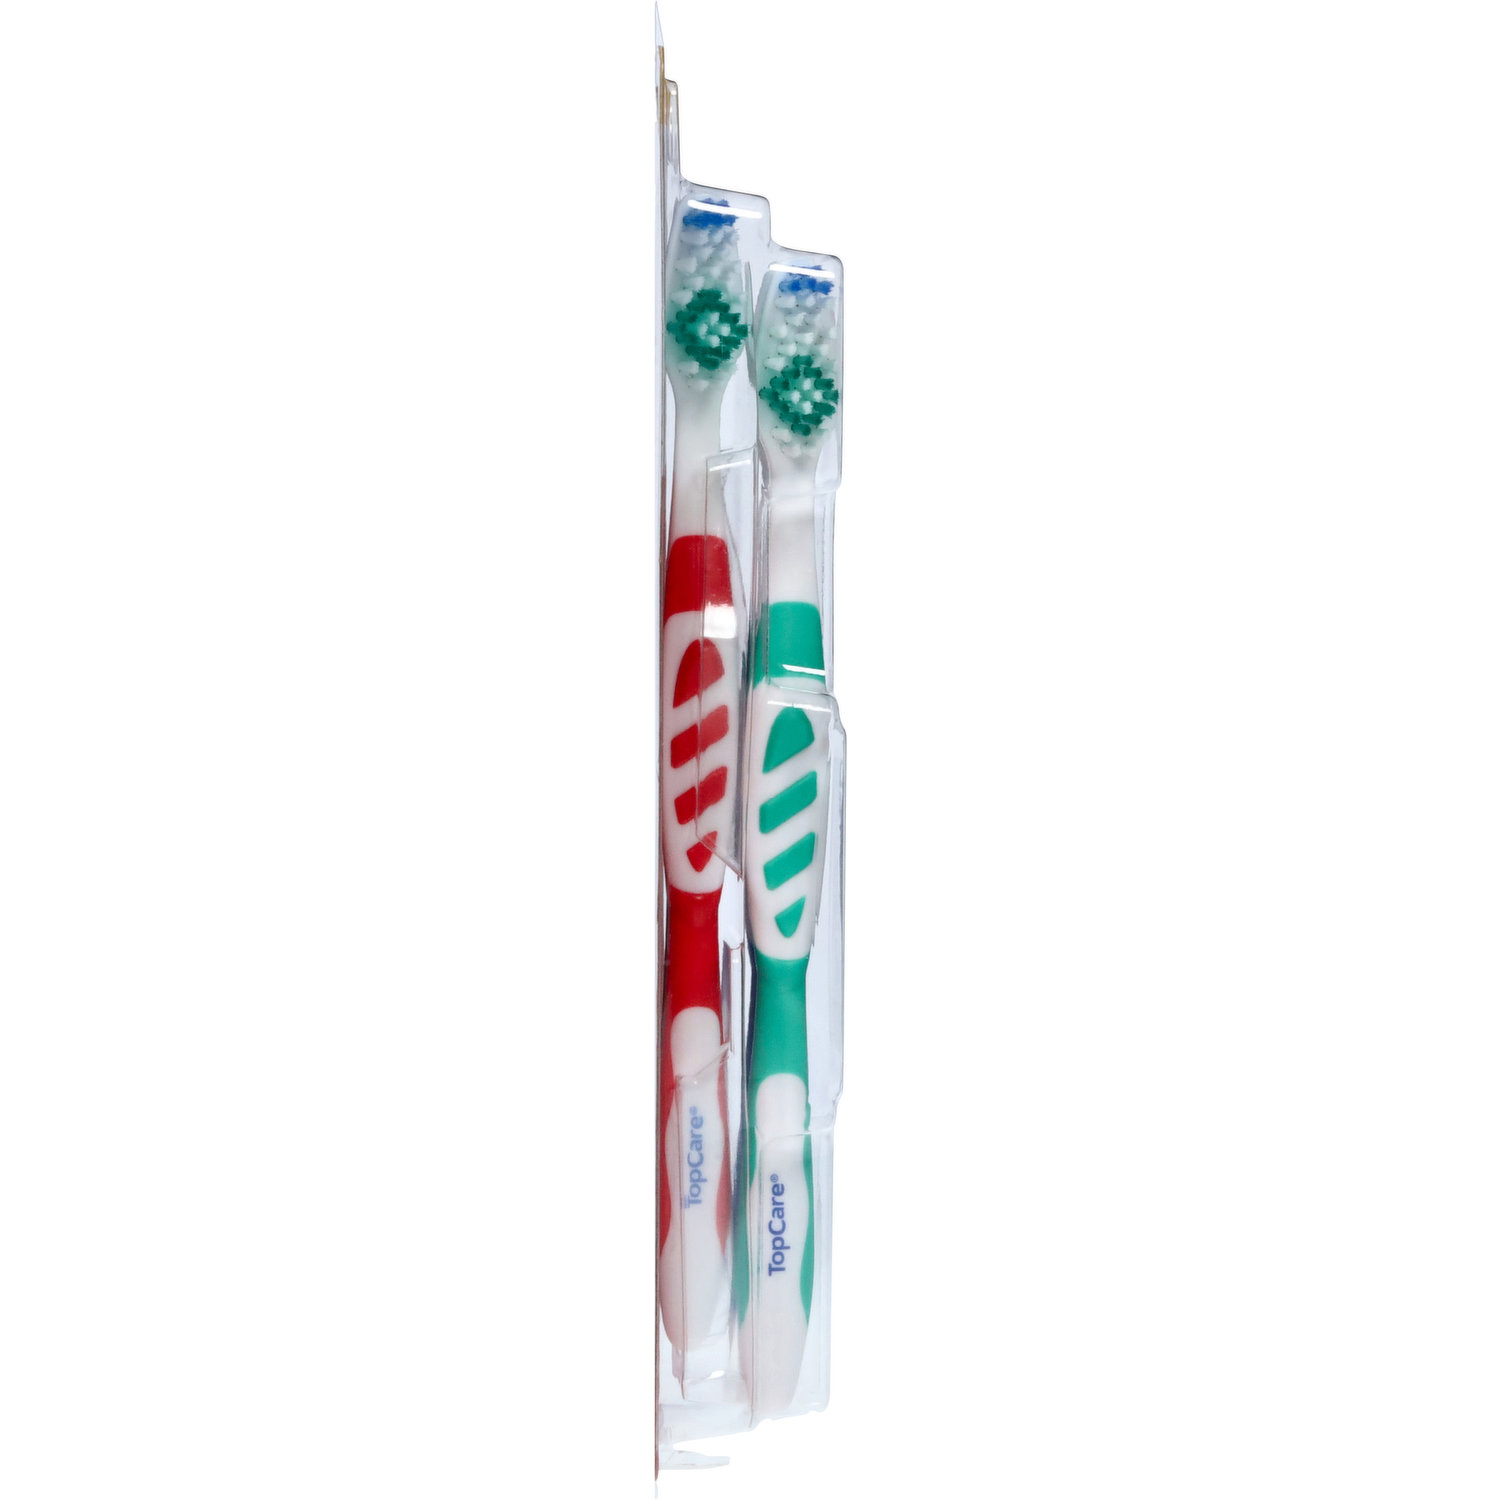 TopCare Smartgrip Contour, Soft Regular Toothbrush - King Kullen